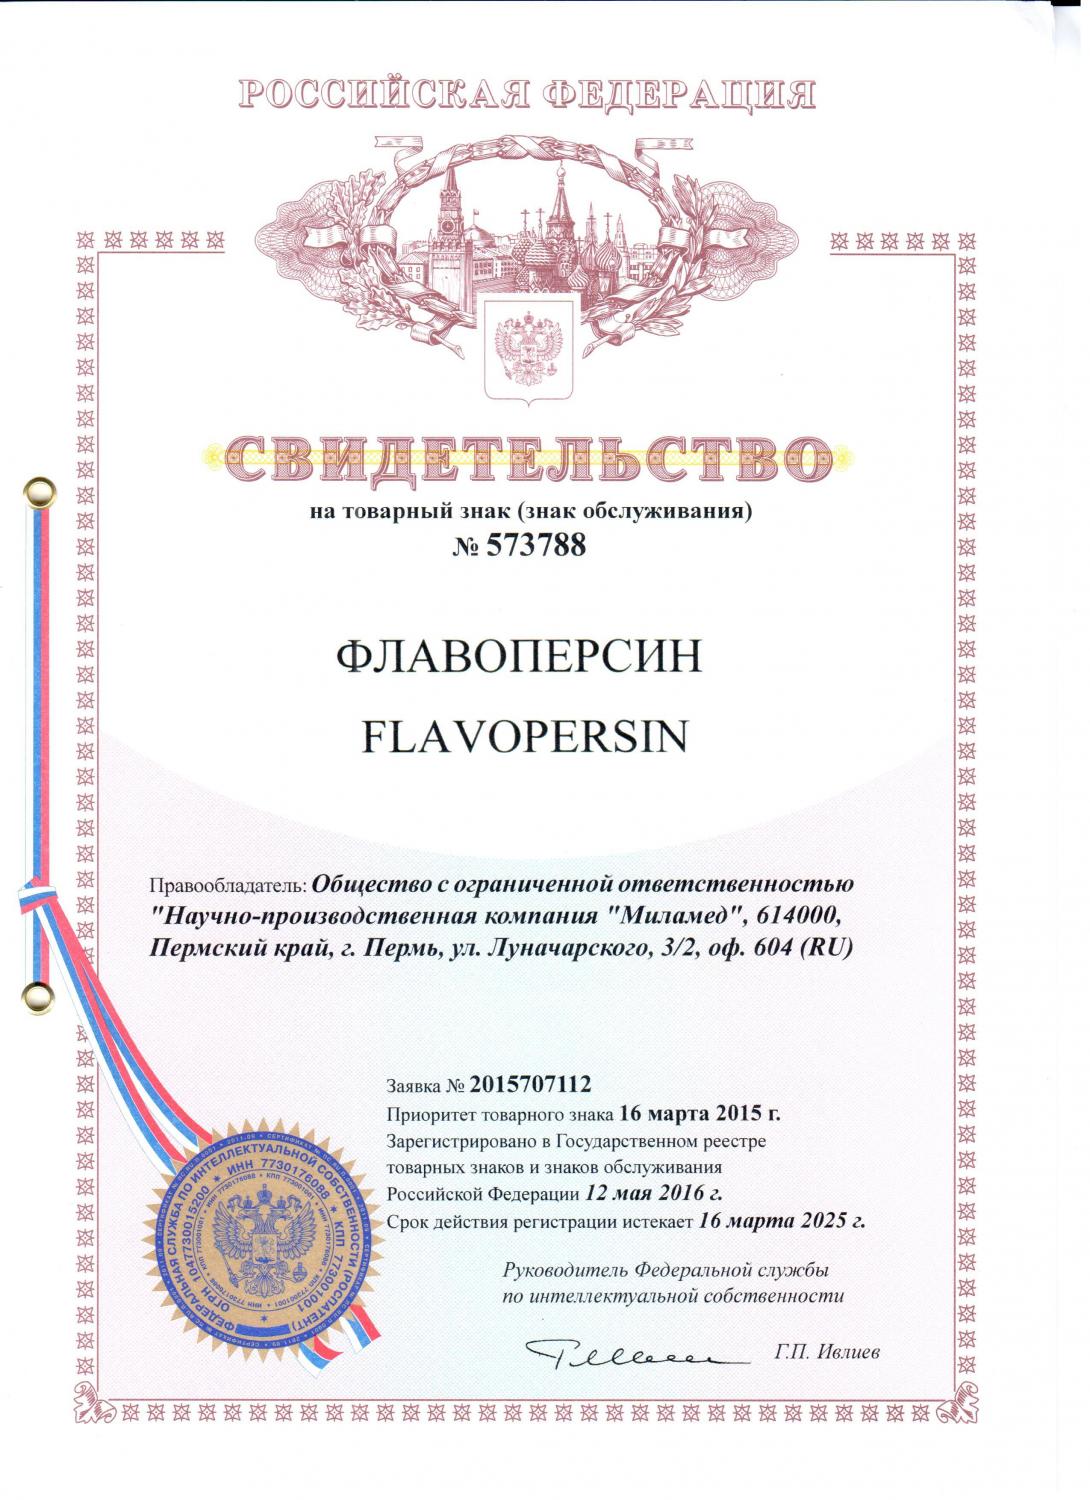 Certificate for Trademark “Flavopersin”